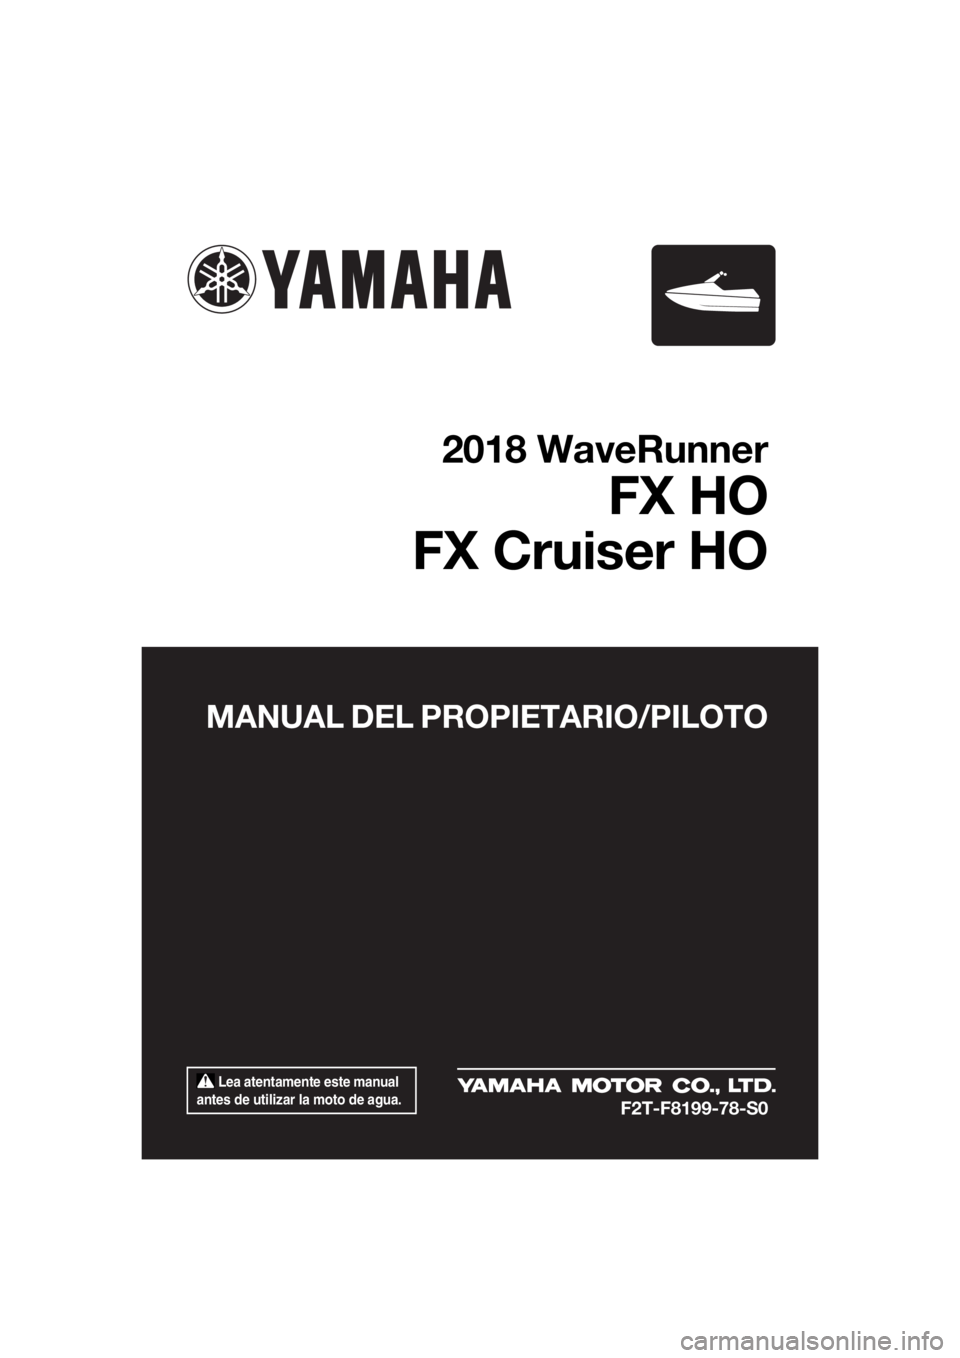 YAMAHA FX HO CRUISER 2018  Manuale de Empleo (in Spanish) 